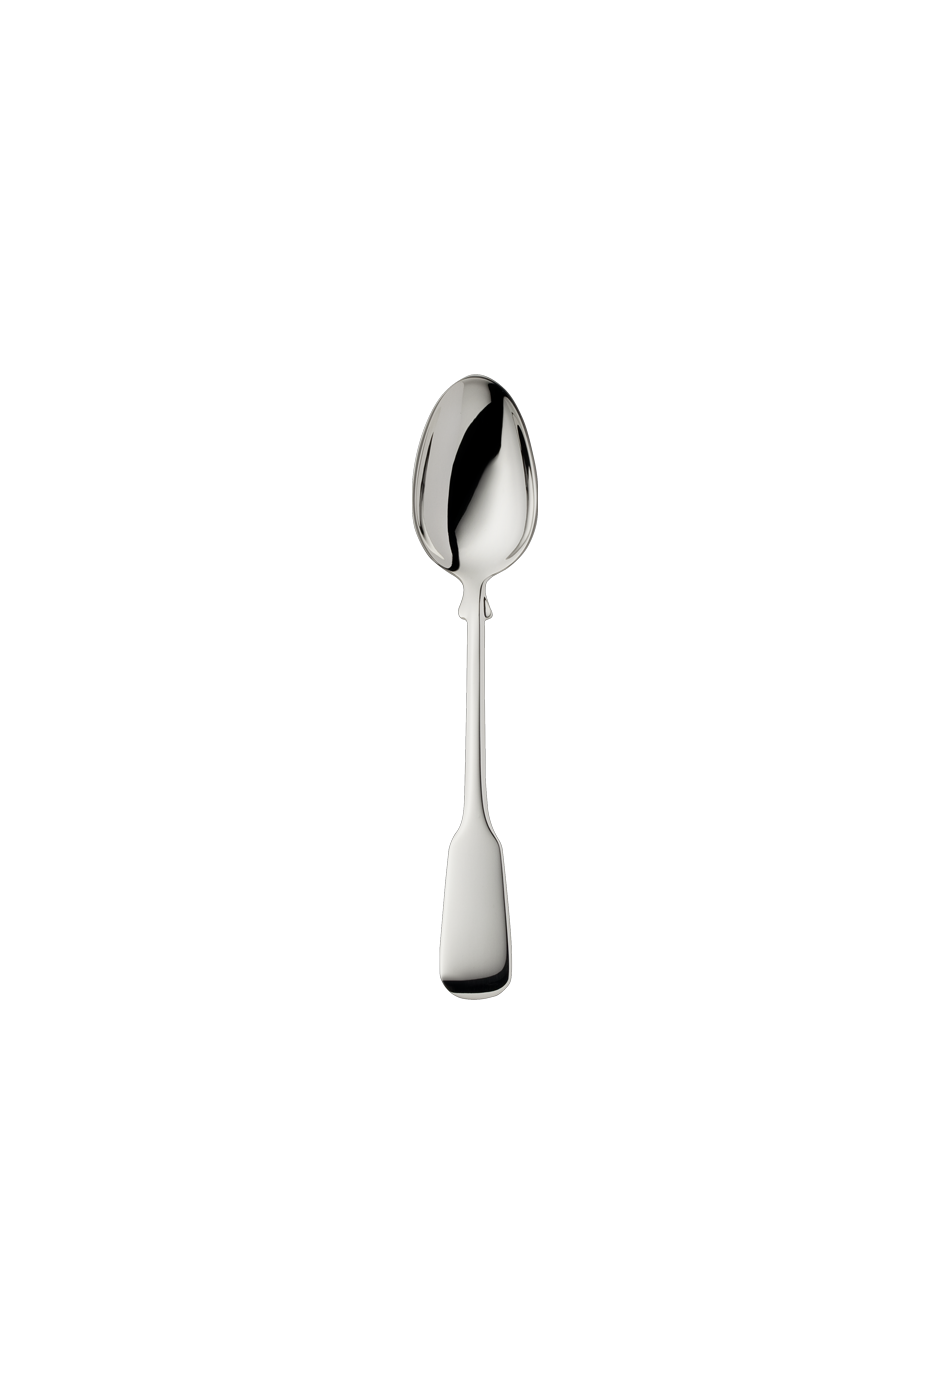 Spaten Coffee Spoon 13,0 Cm (150g massive silverplated)